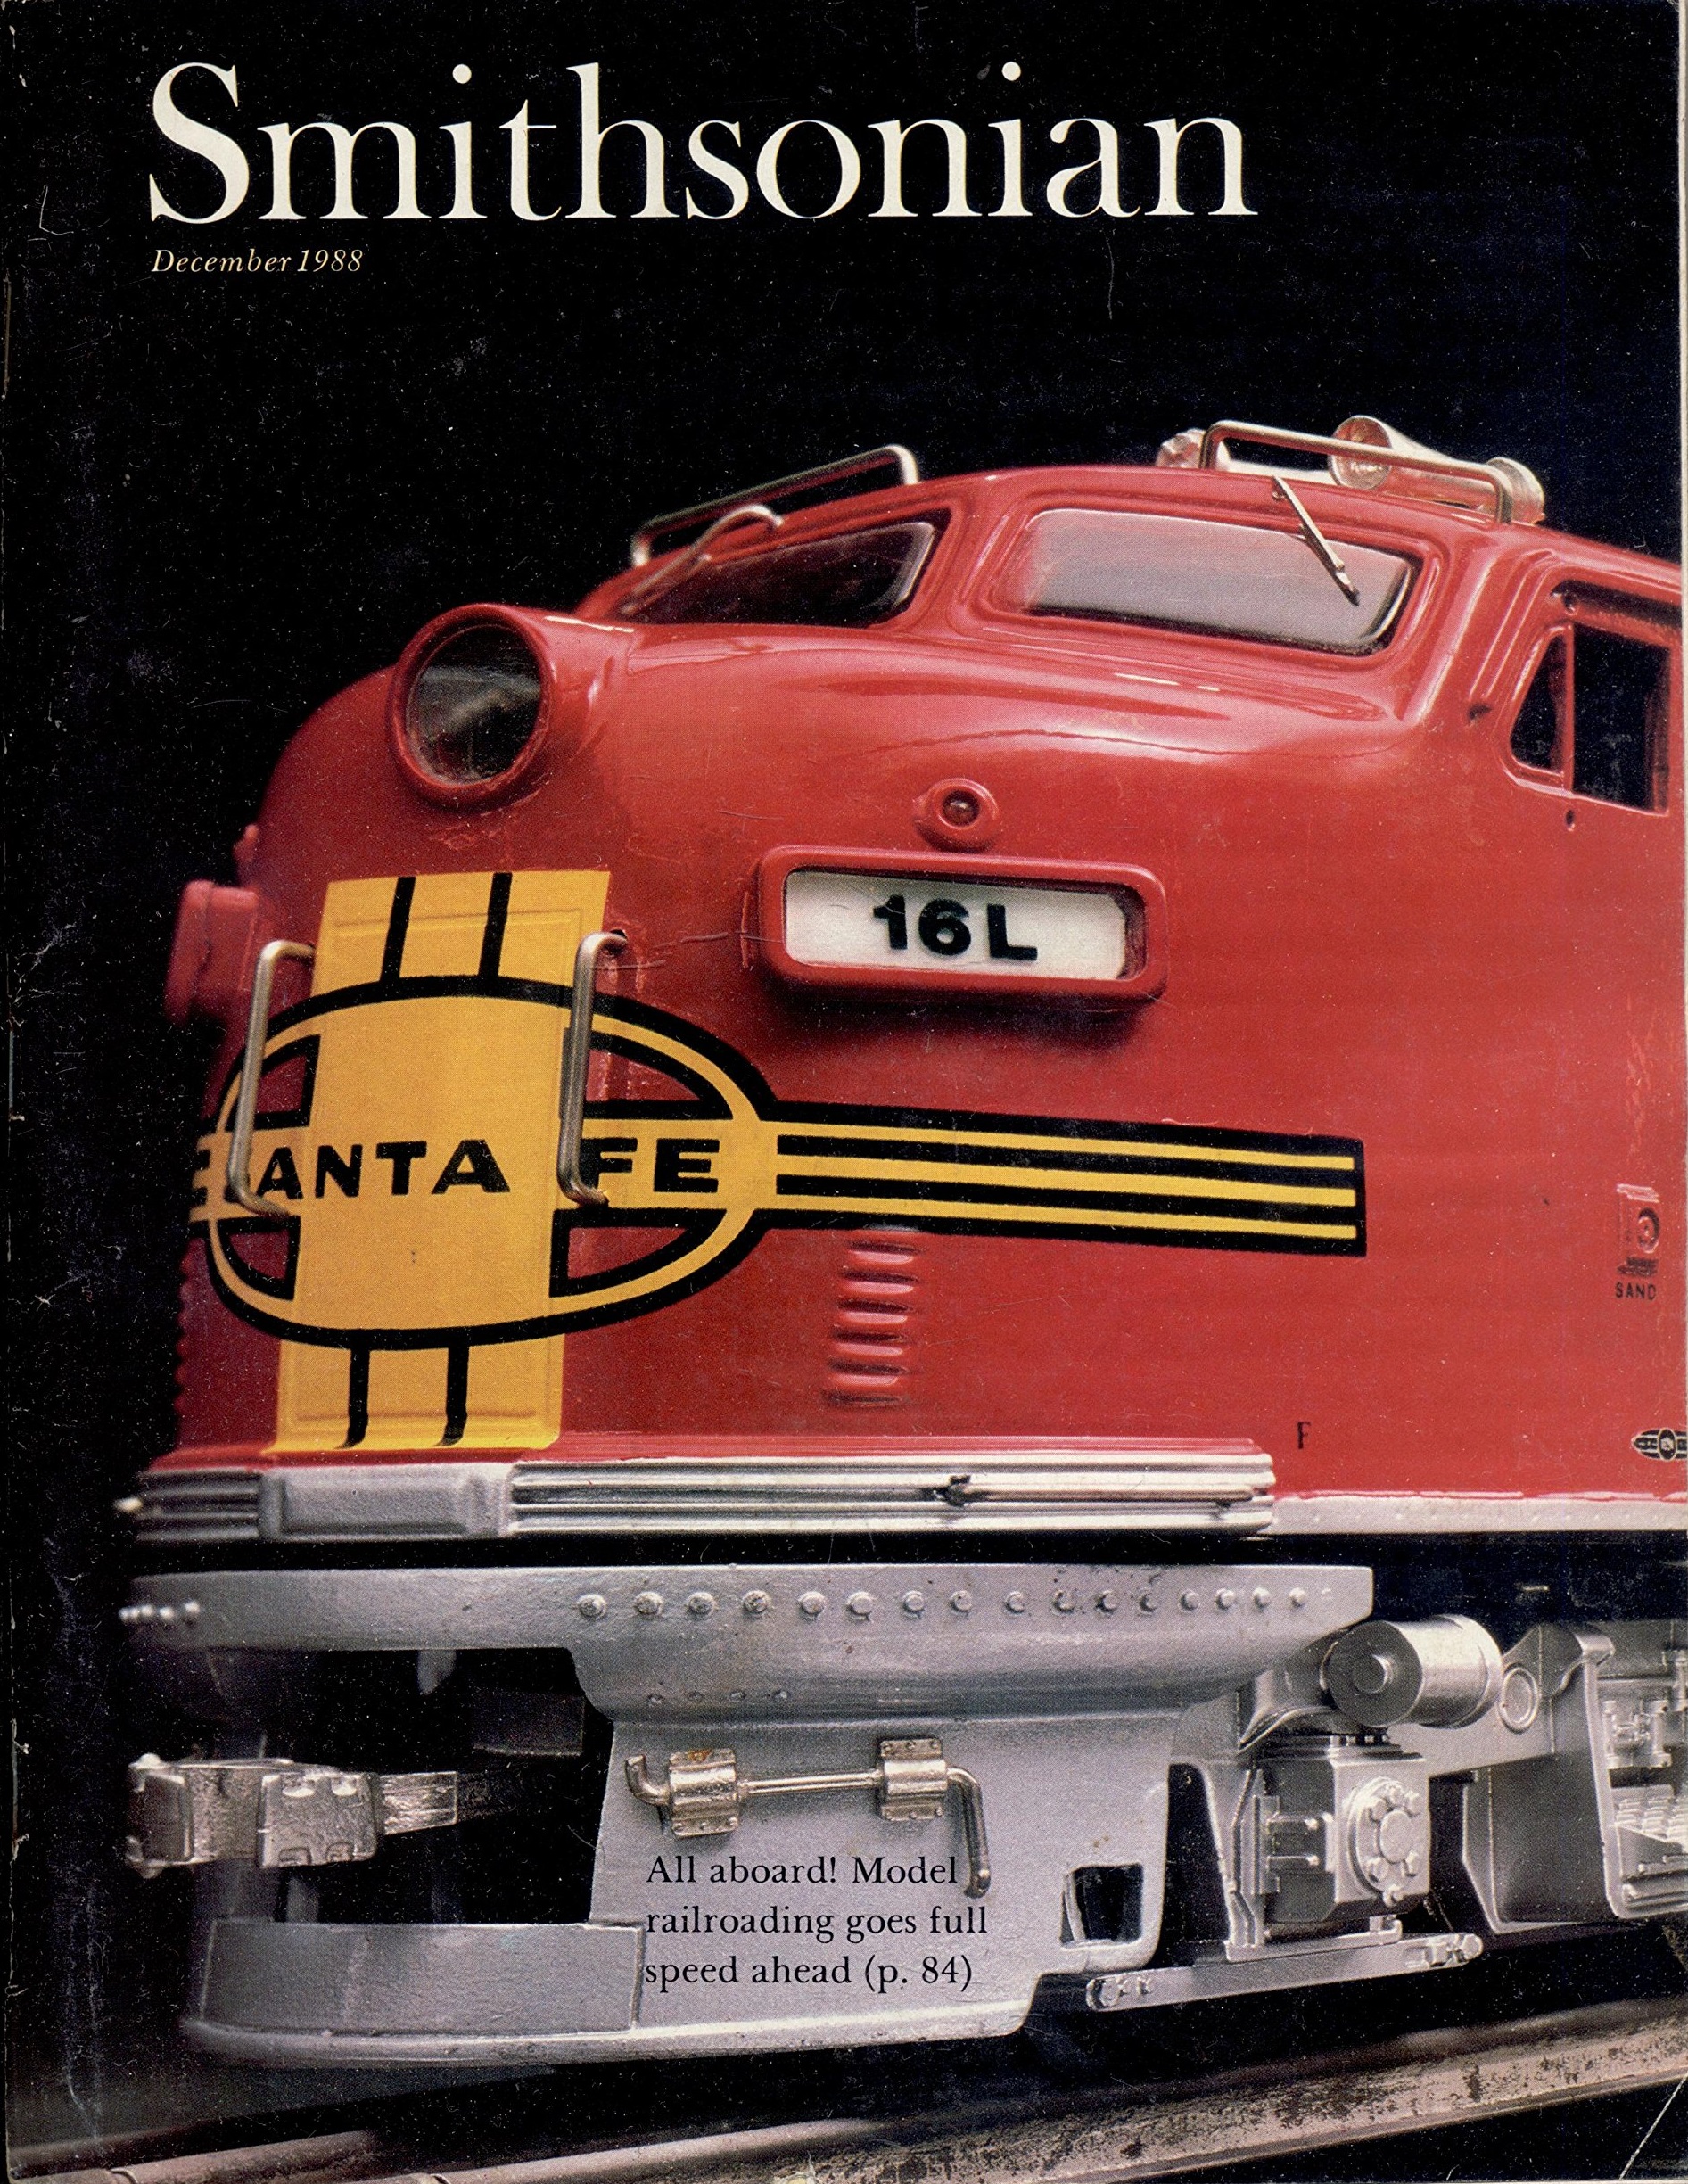 DeHanes Transportation Milestones Standard gauge Santa Fe RR F-3 A unit on the Cover of the Smithsonian Magazine